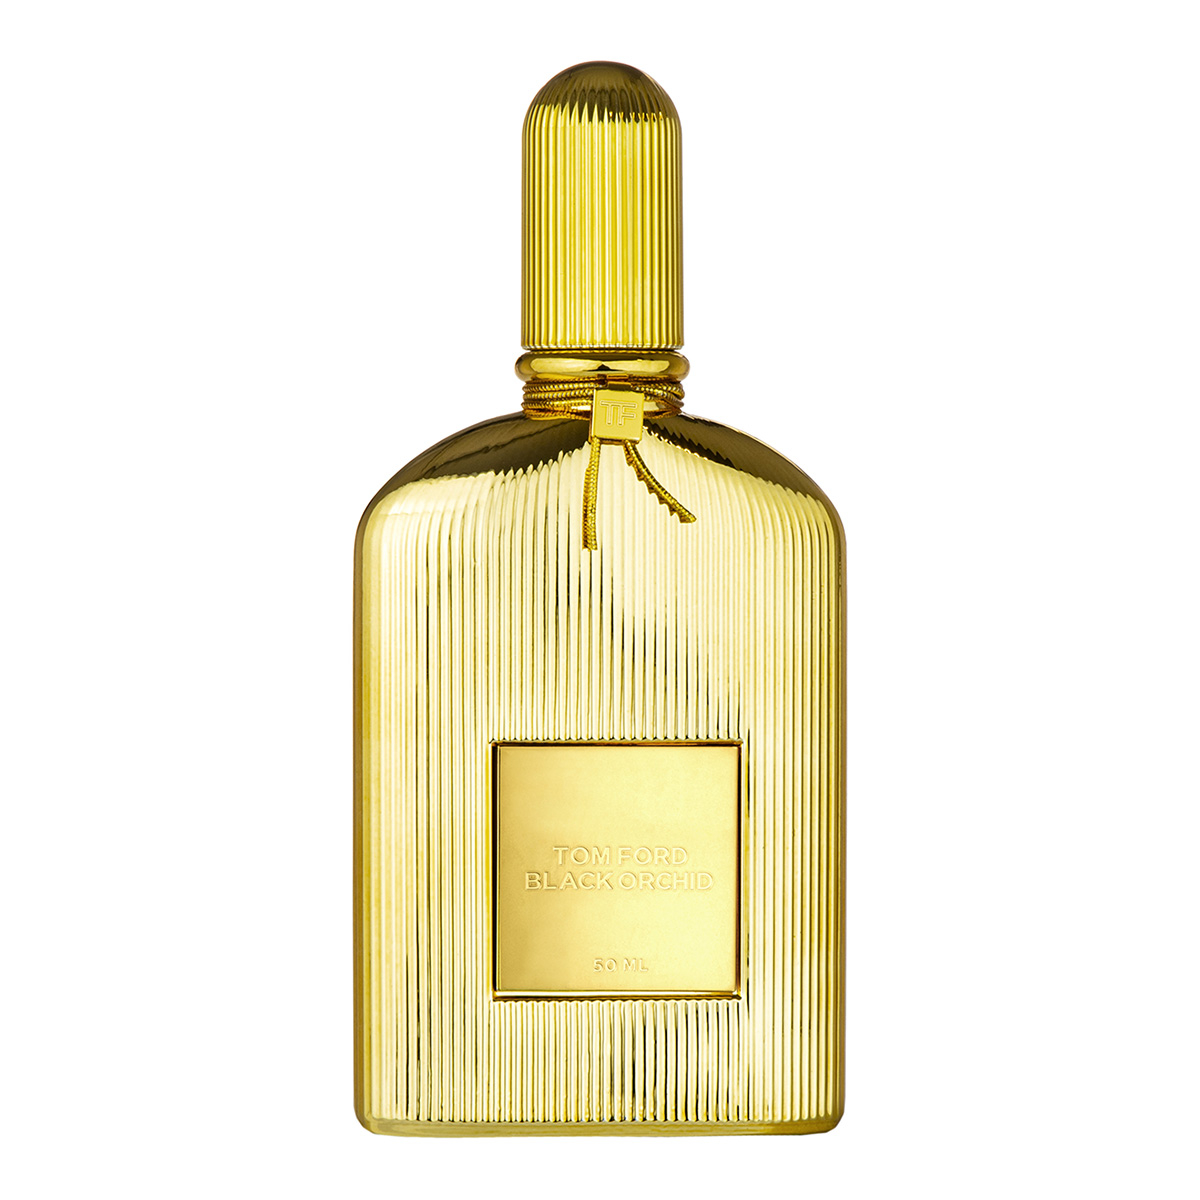 Arriba 75+ imagen tom ford black orchid perfume gold bottle - Abzlocal.mx